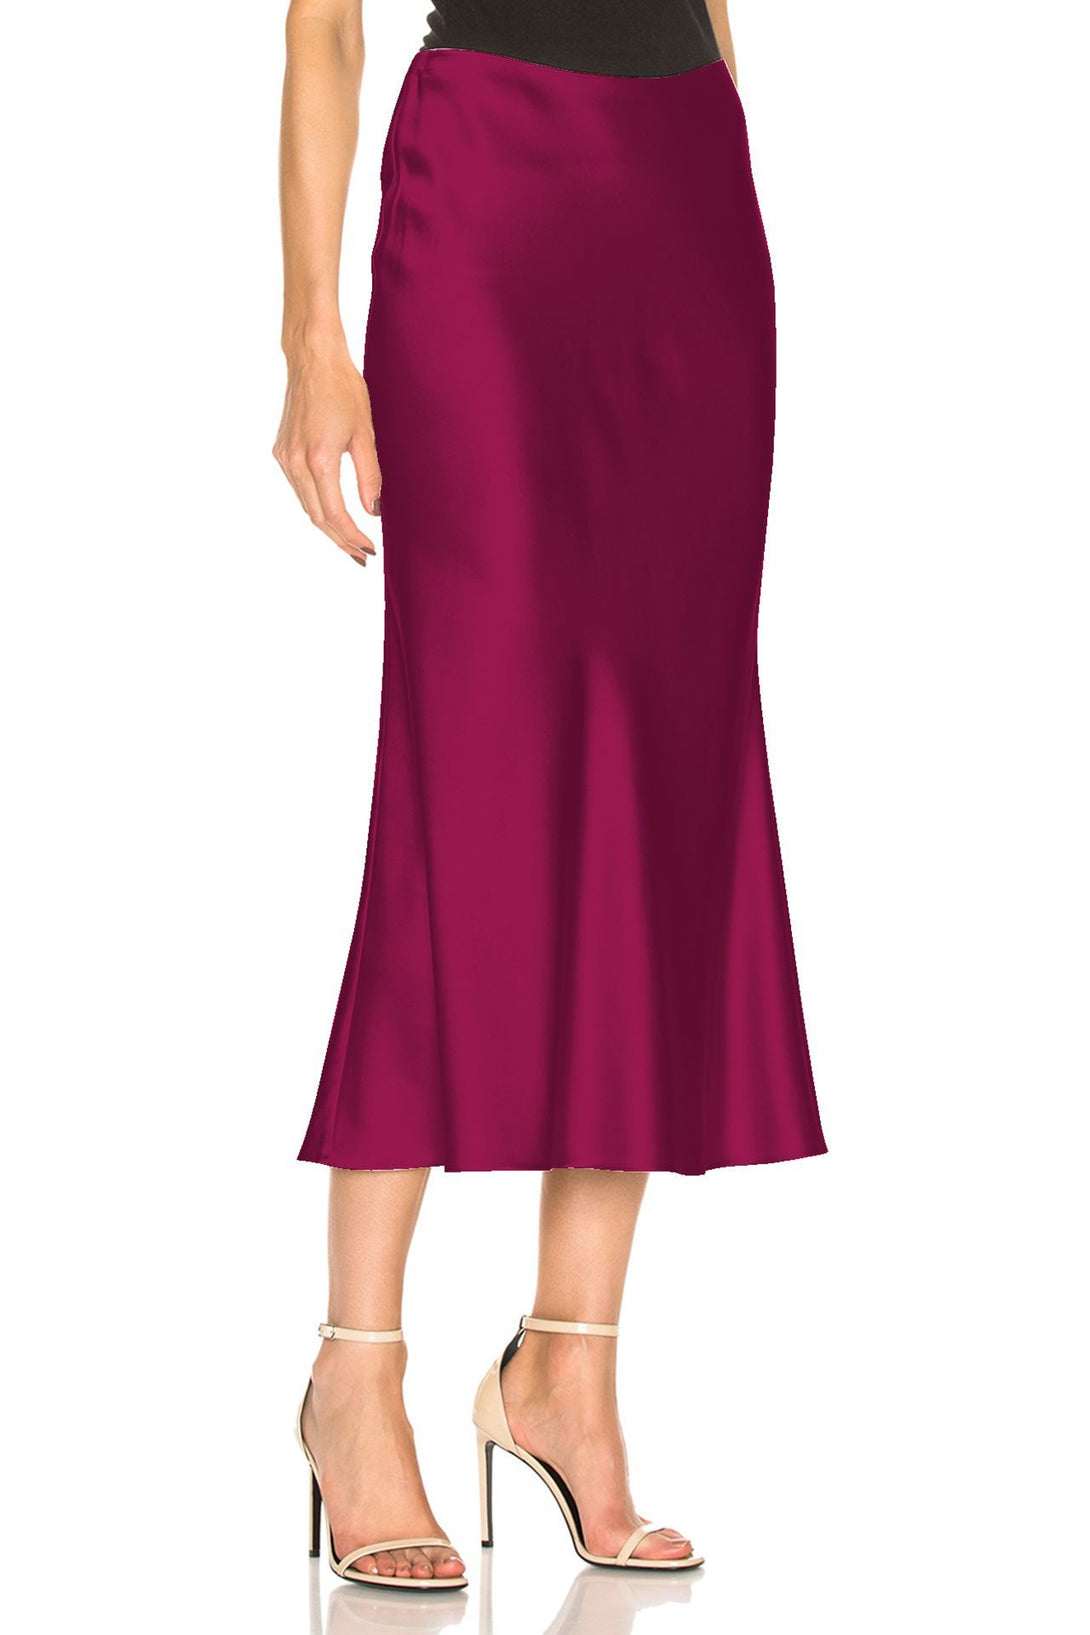 Designer-Silk-Skirt-In-Purple-For-Womens-By-Kyle